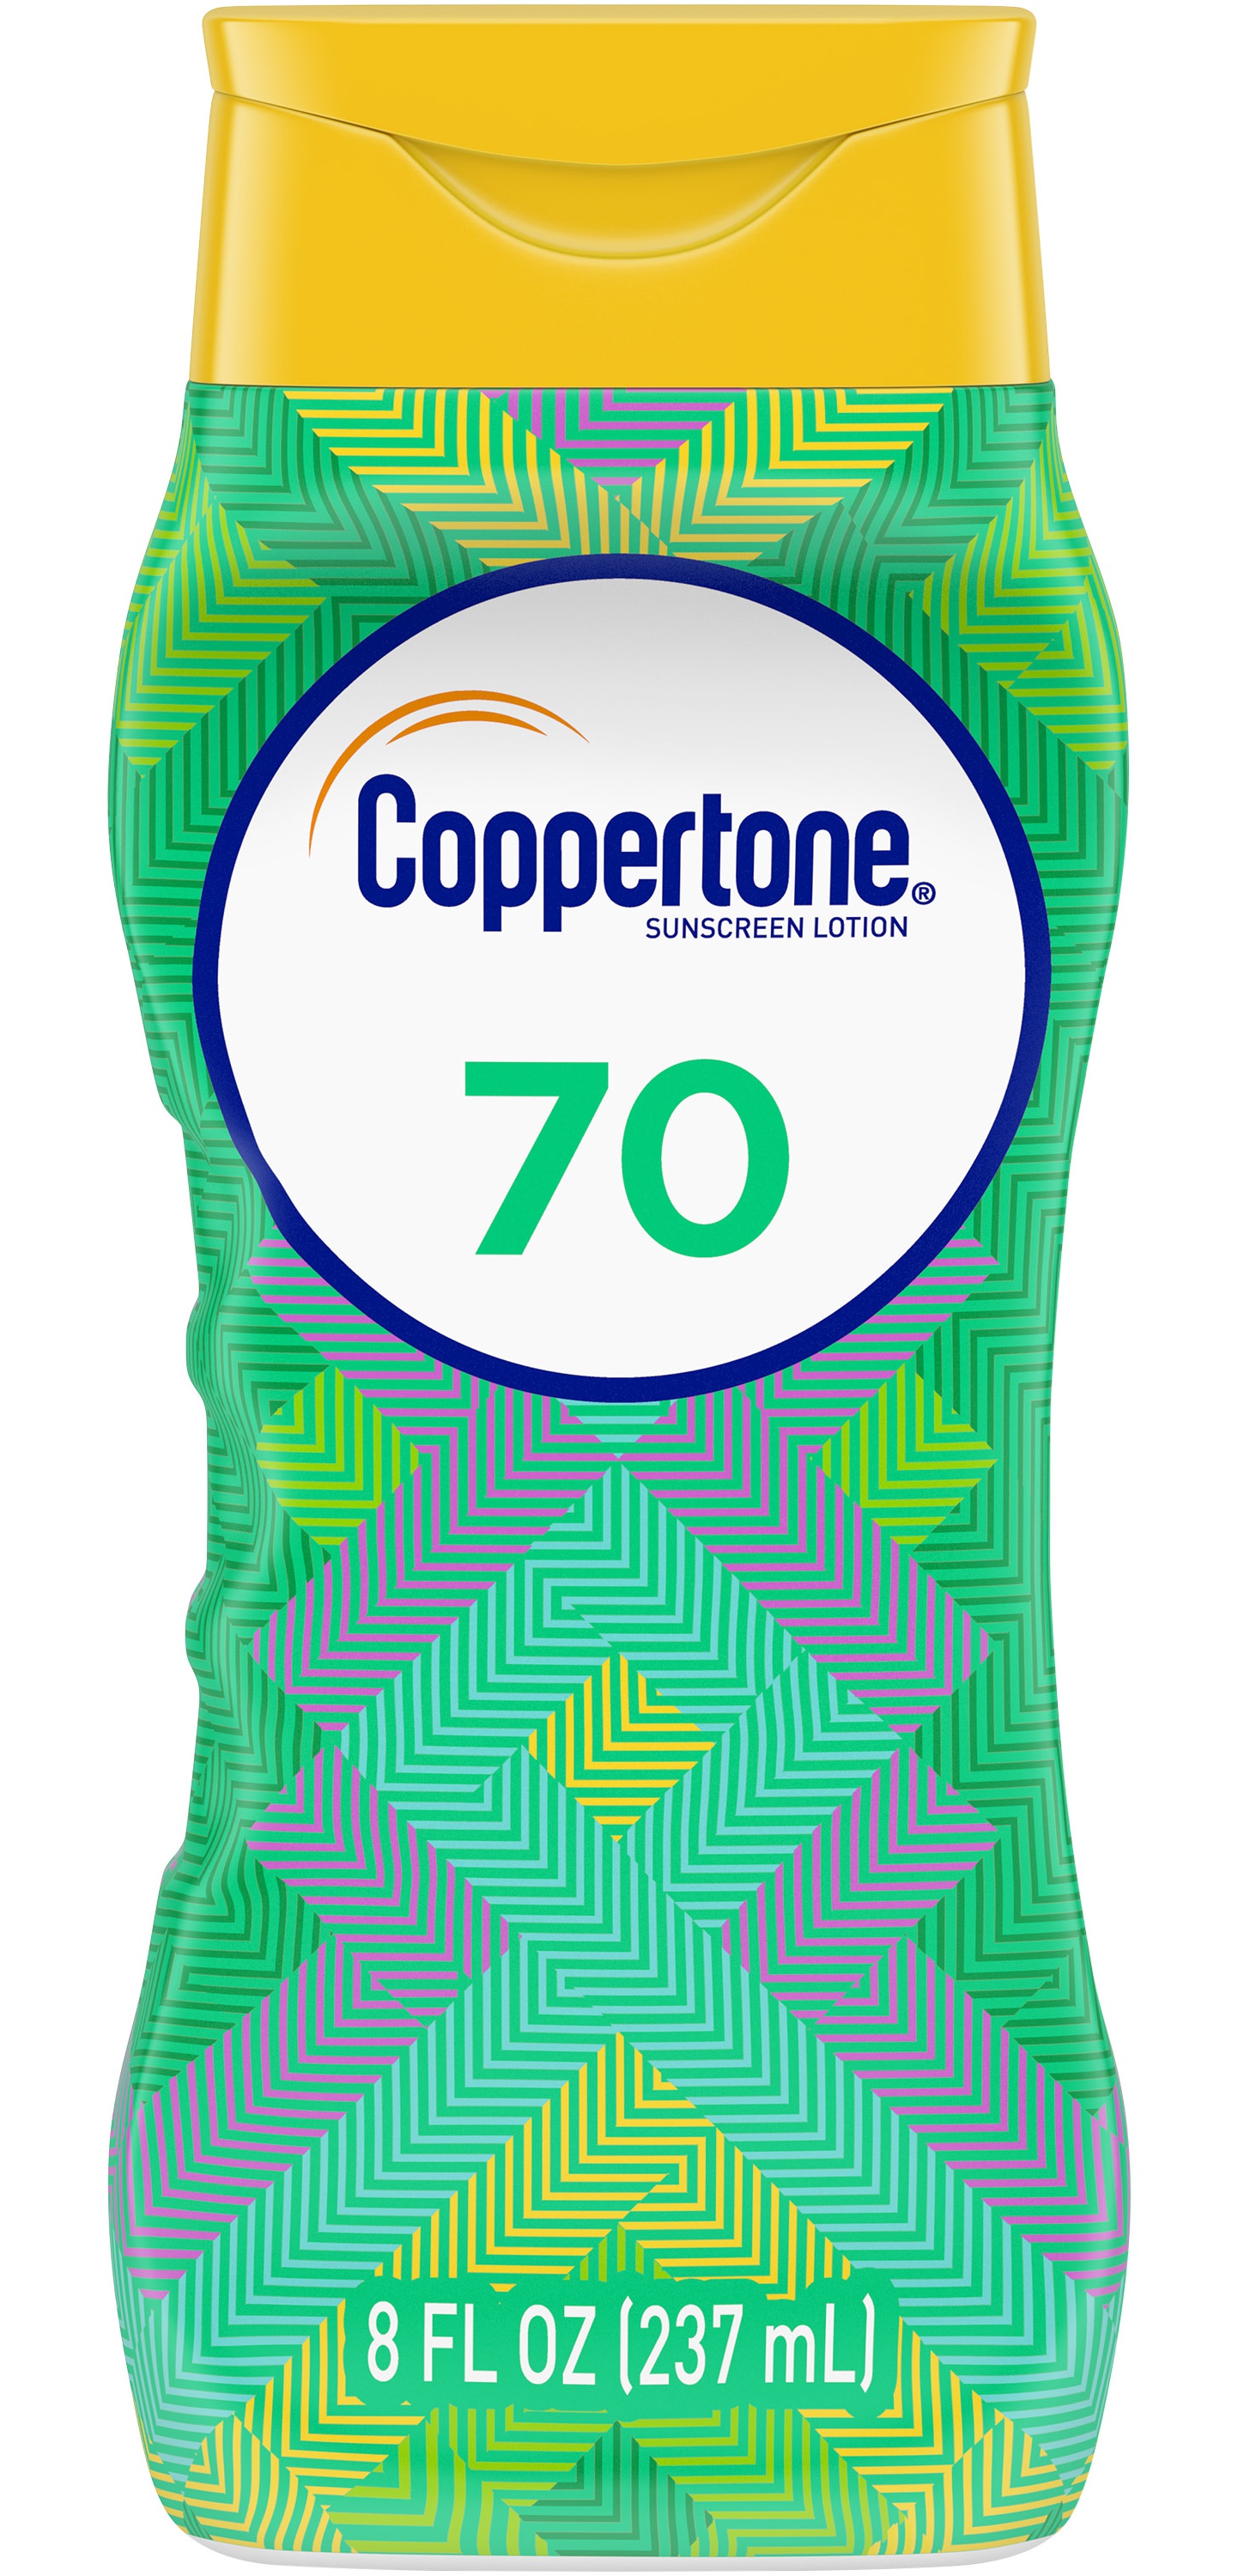 Coppertone Limited Edition Ultra Guard SPF 70 Sunscreen Lotion